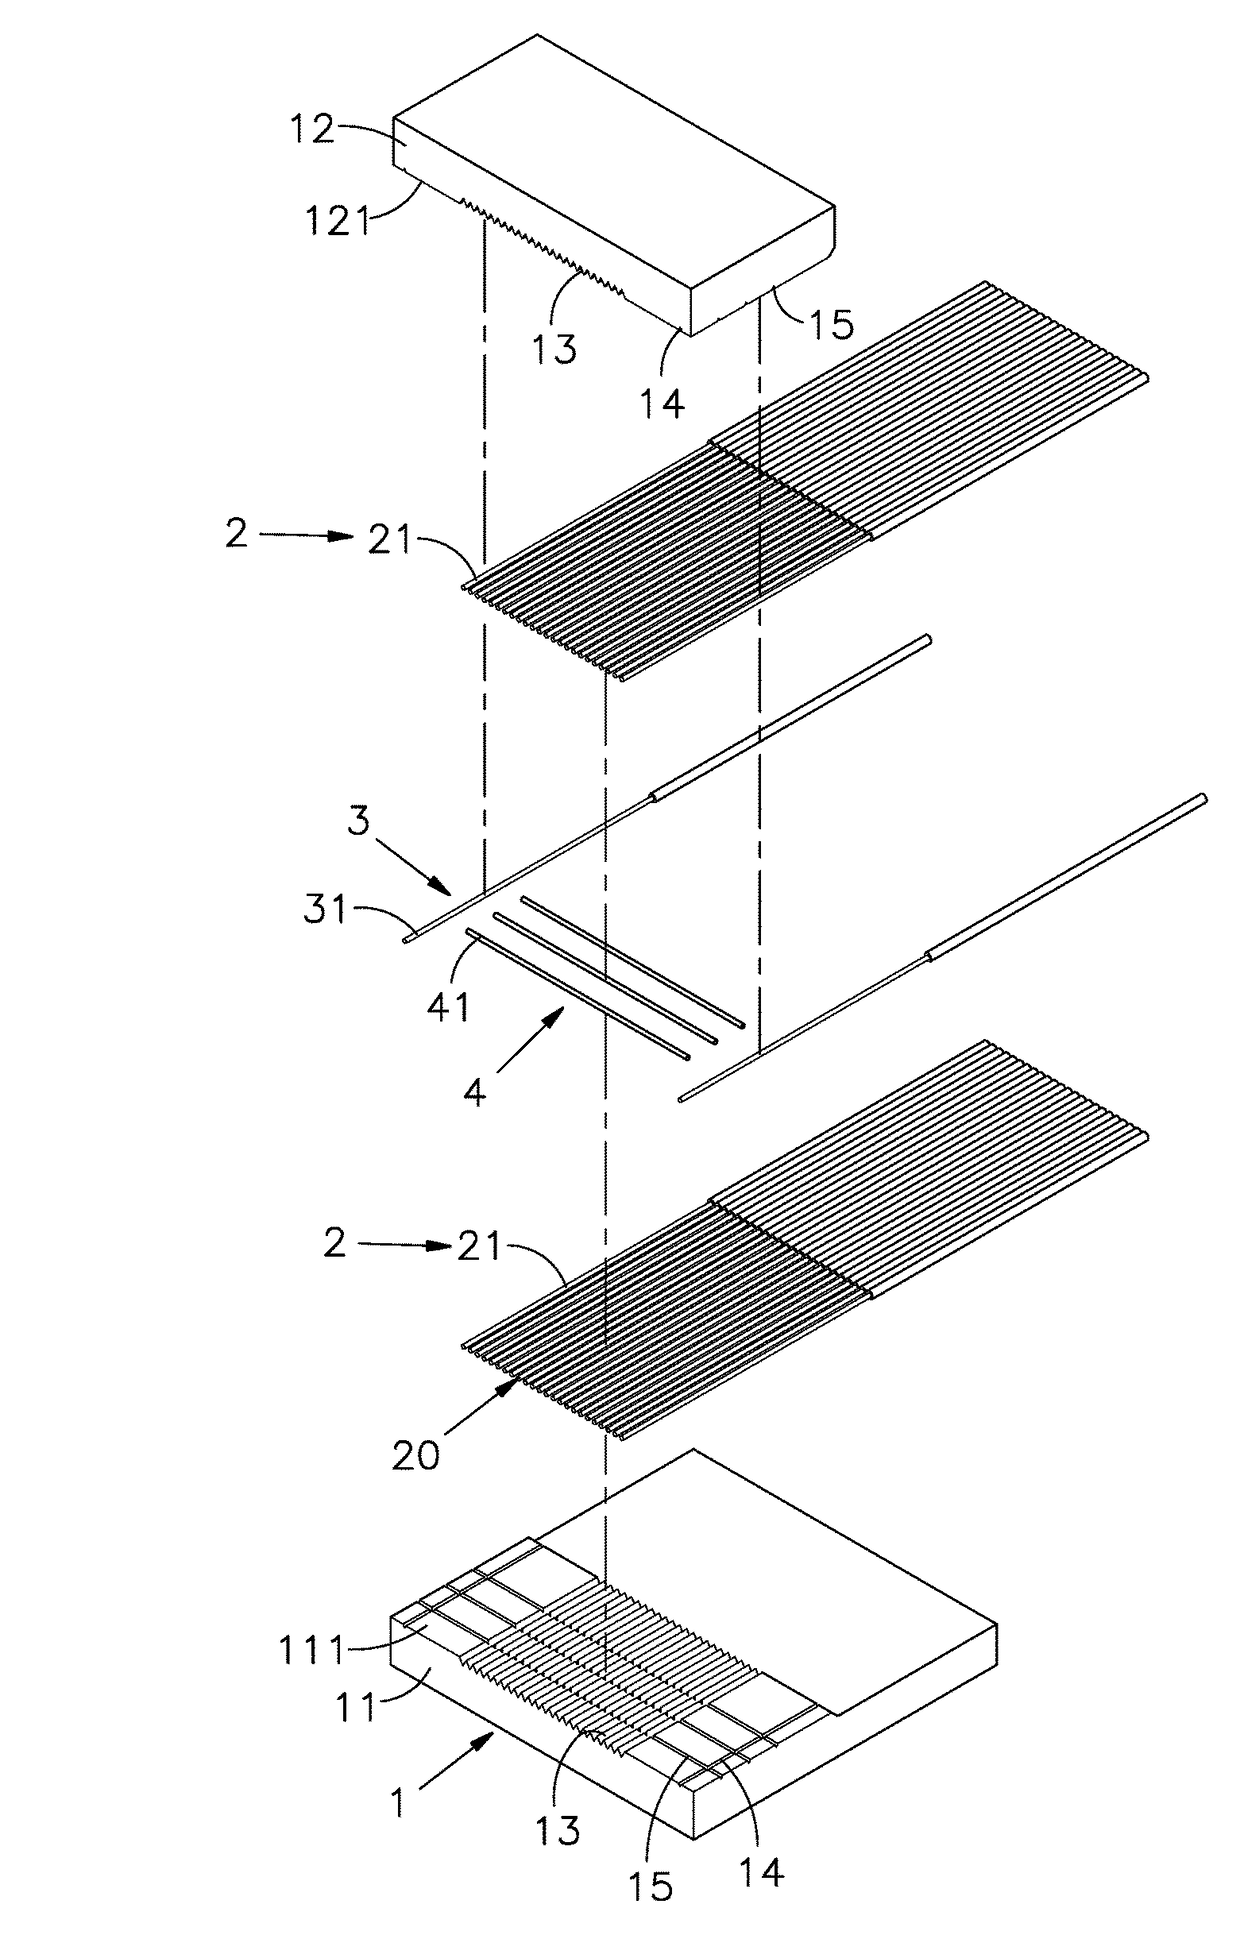 2-dimensional fiber array structure